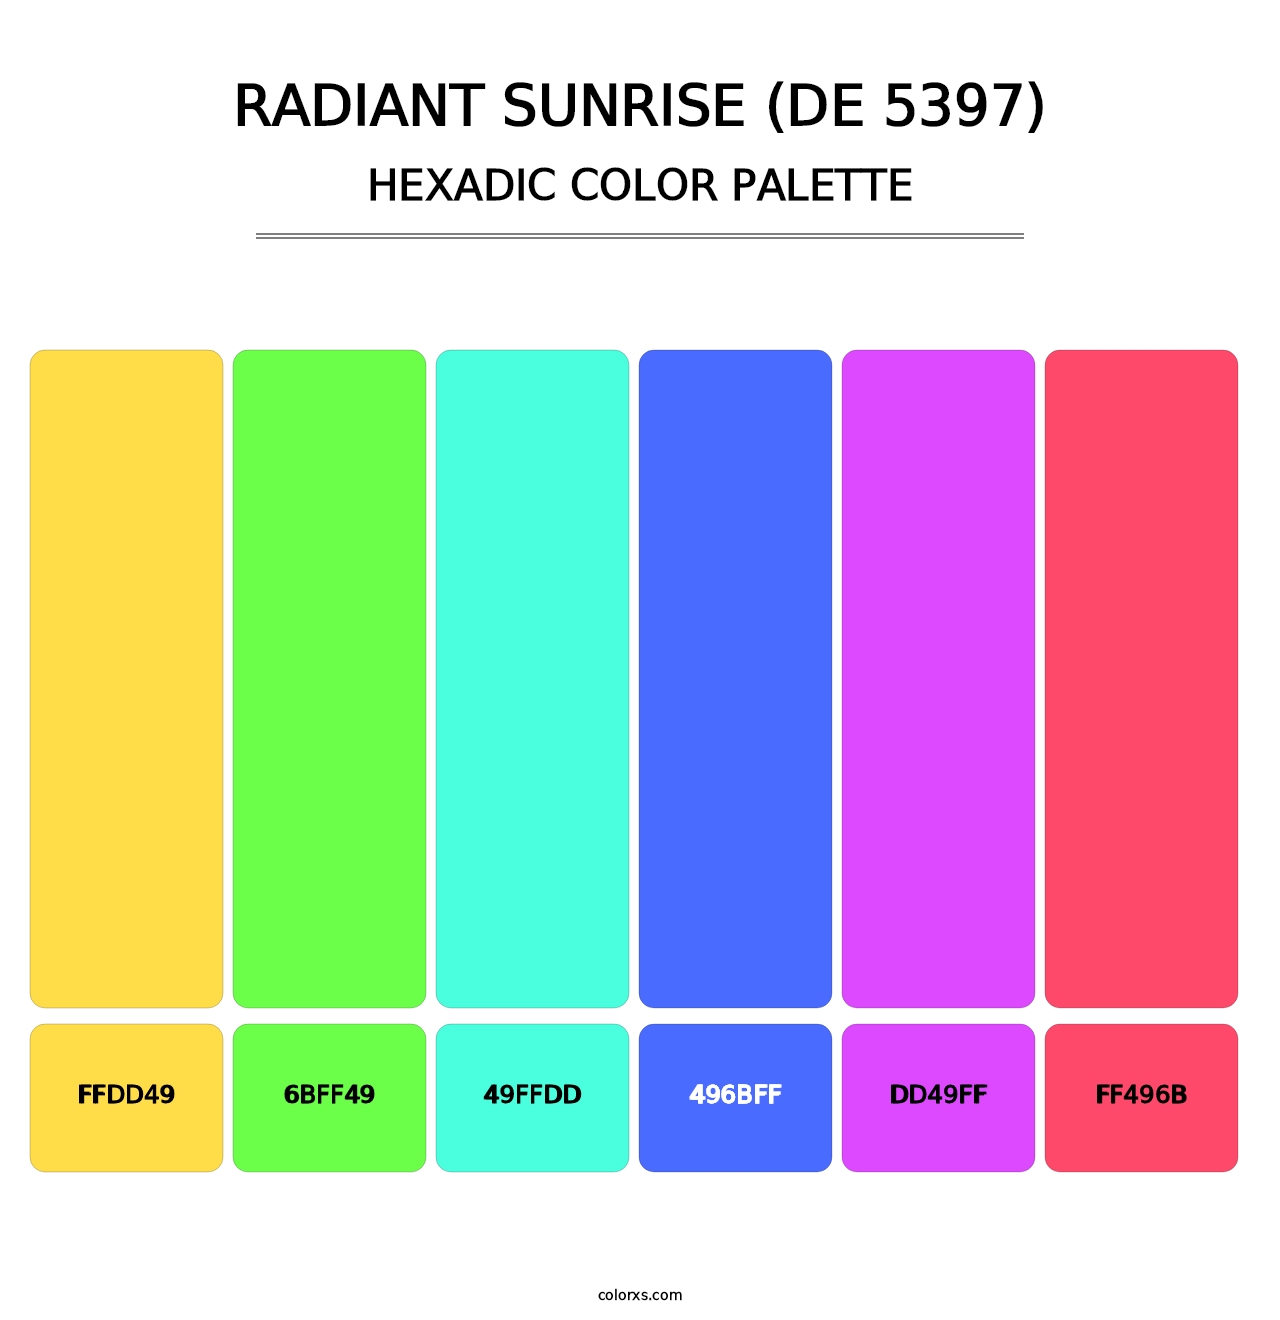 Radiant Sunrise (DE 5397) - Hexadic Color Palette